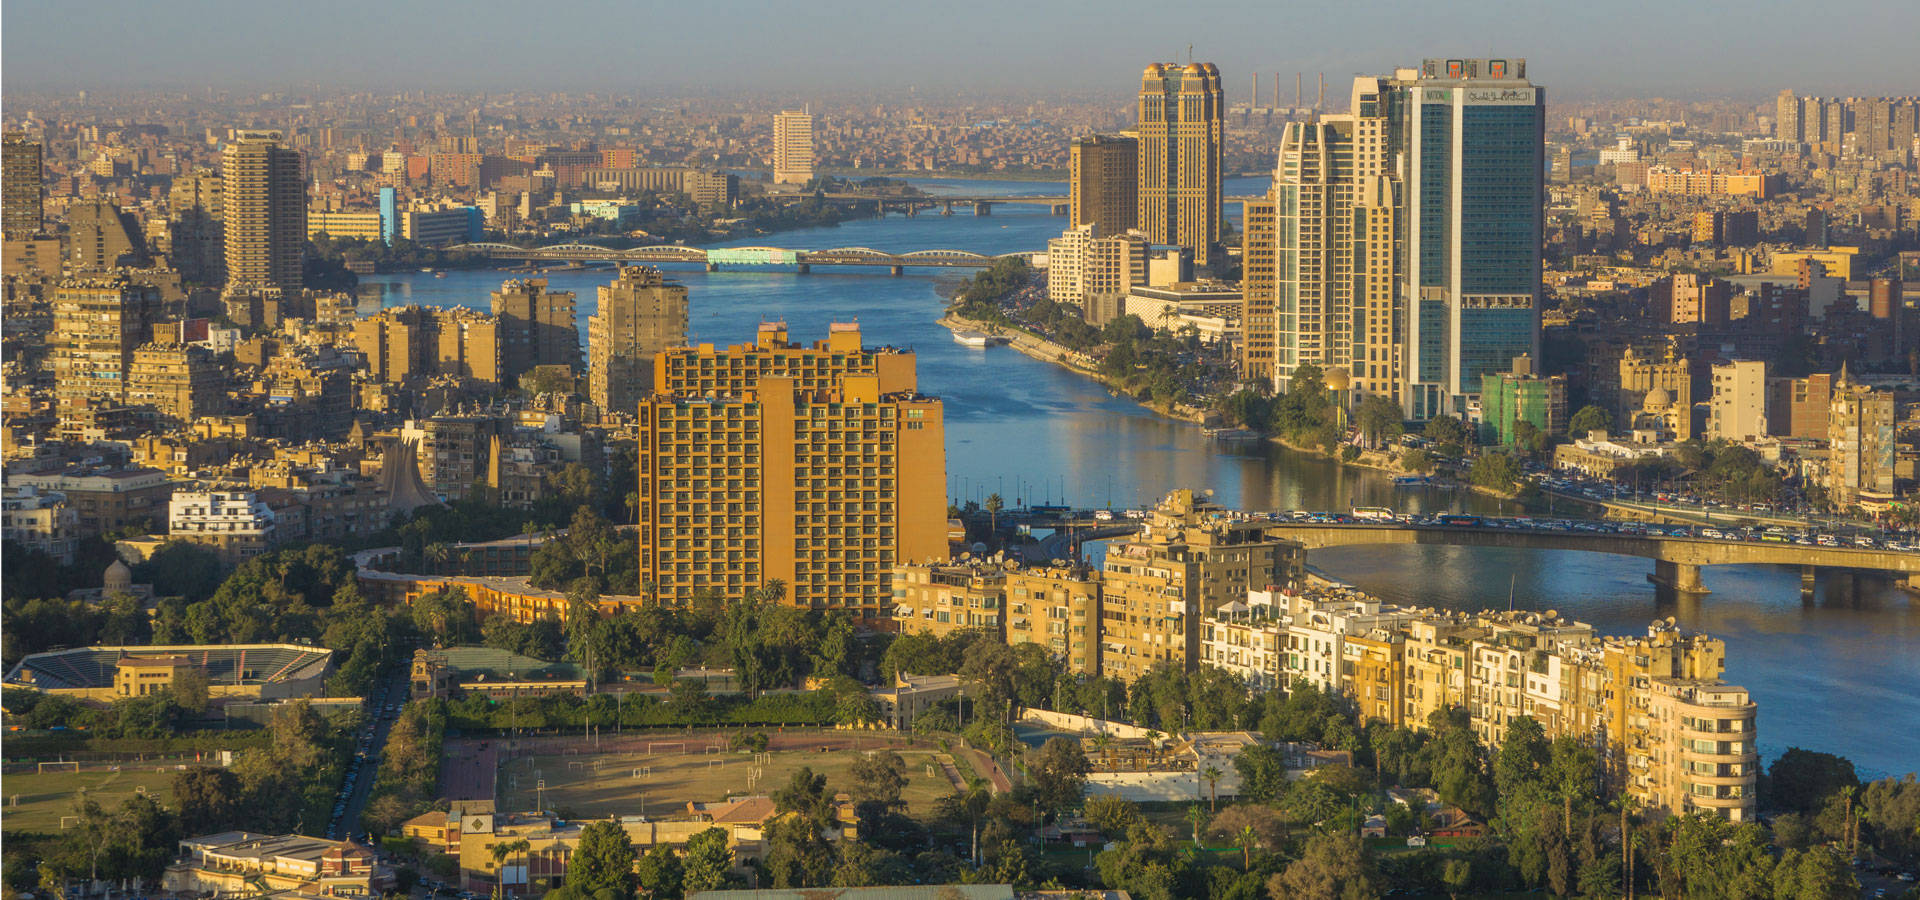 Cairo Background Photos